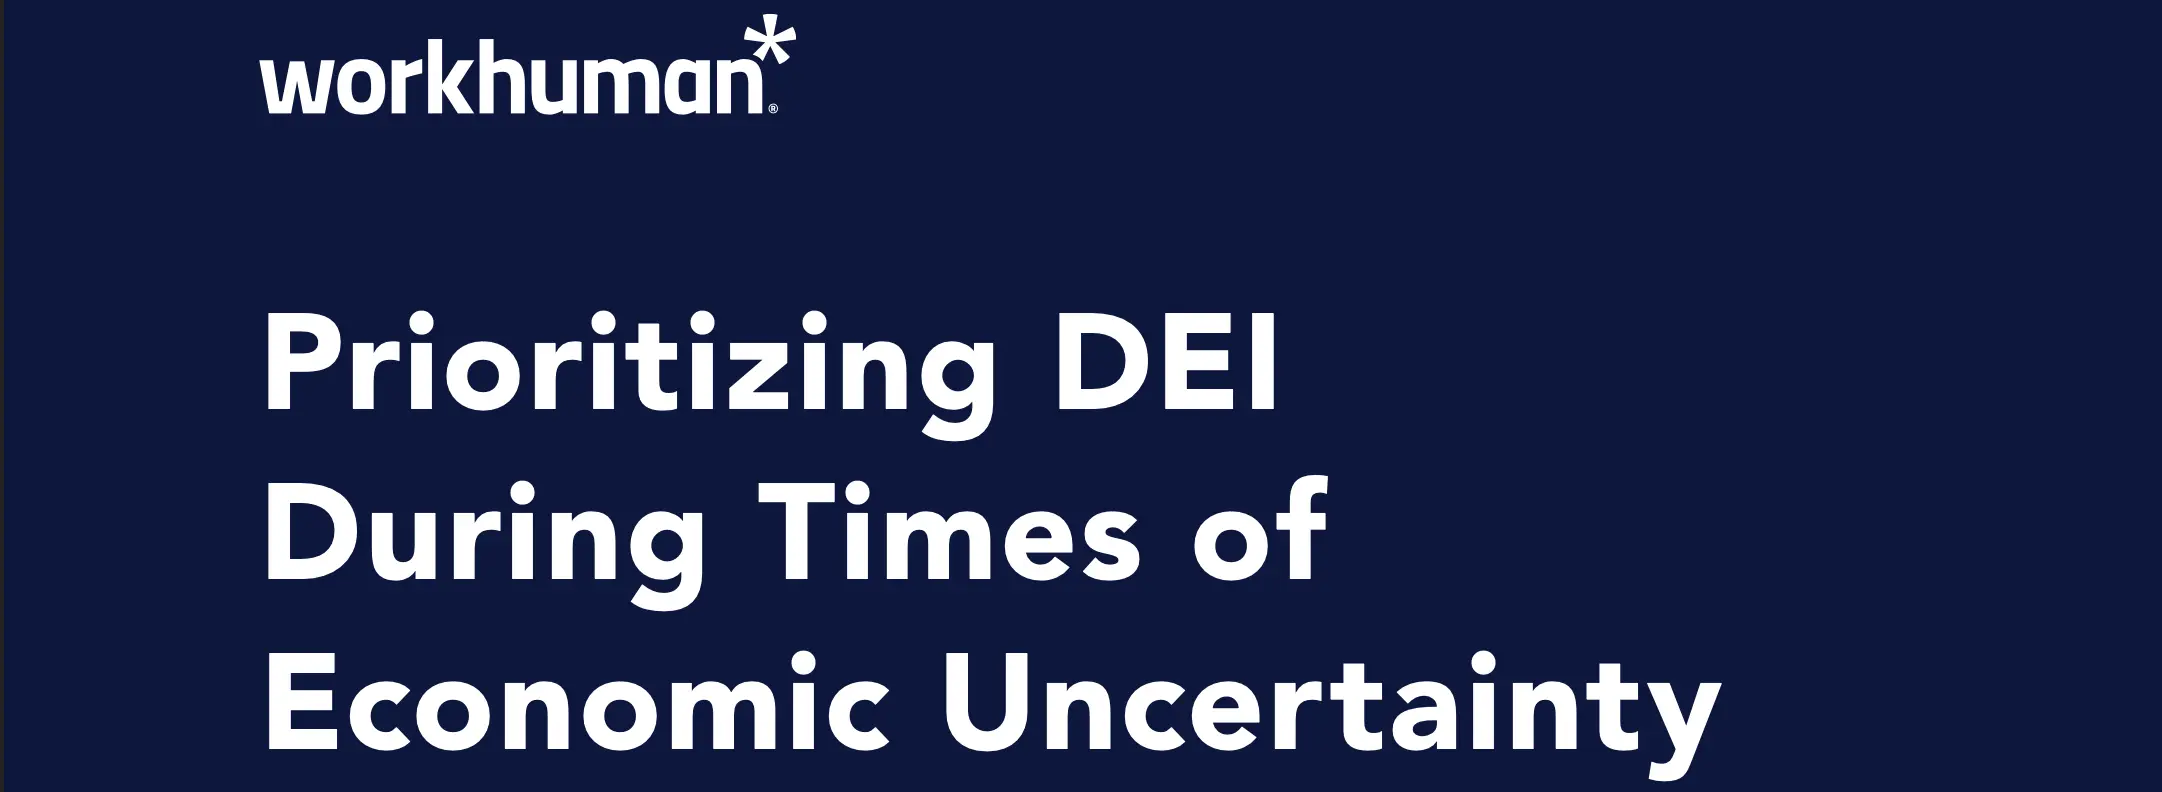 Prioritizing DEI During Times of Economic Uncertainty_FeatureImage